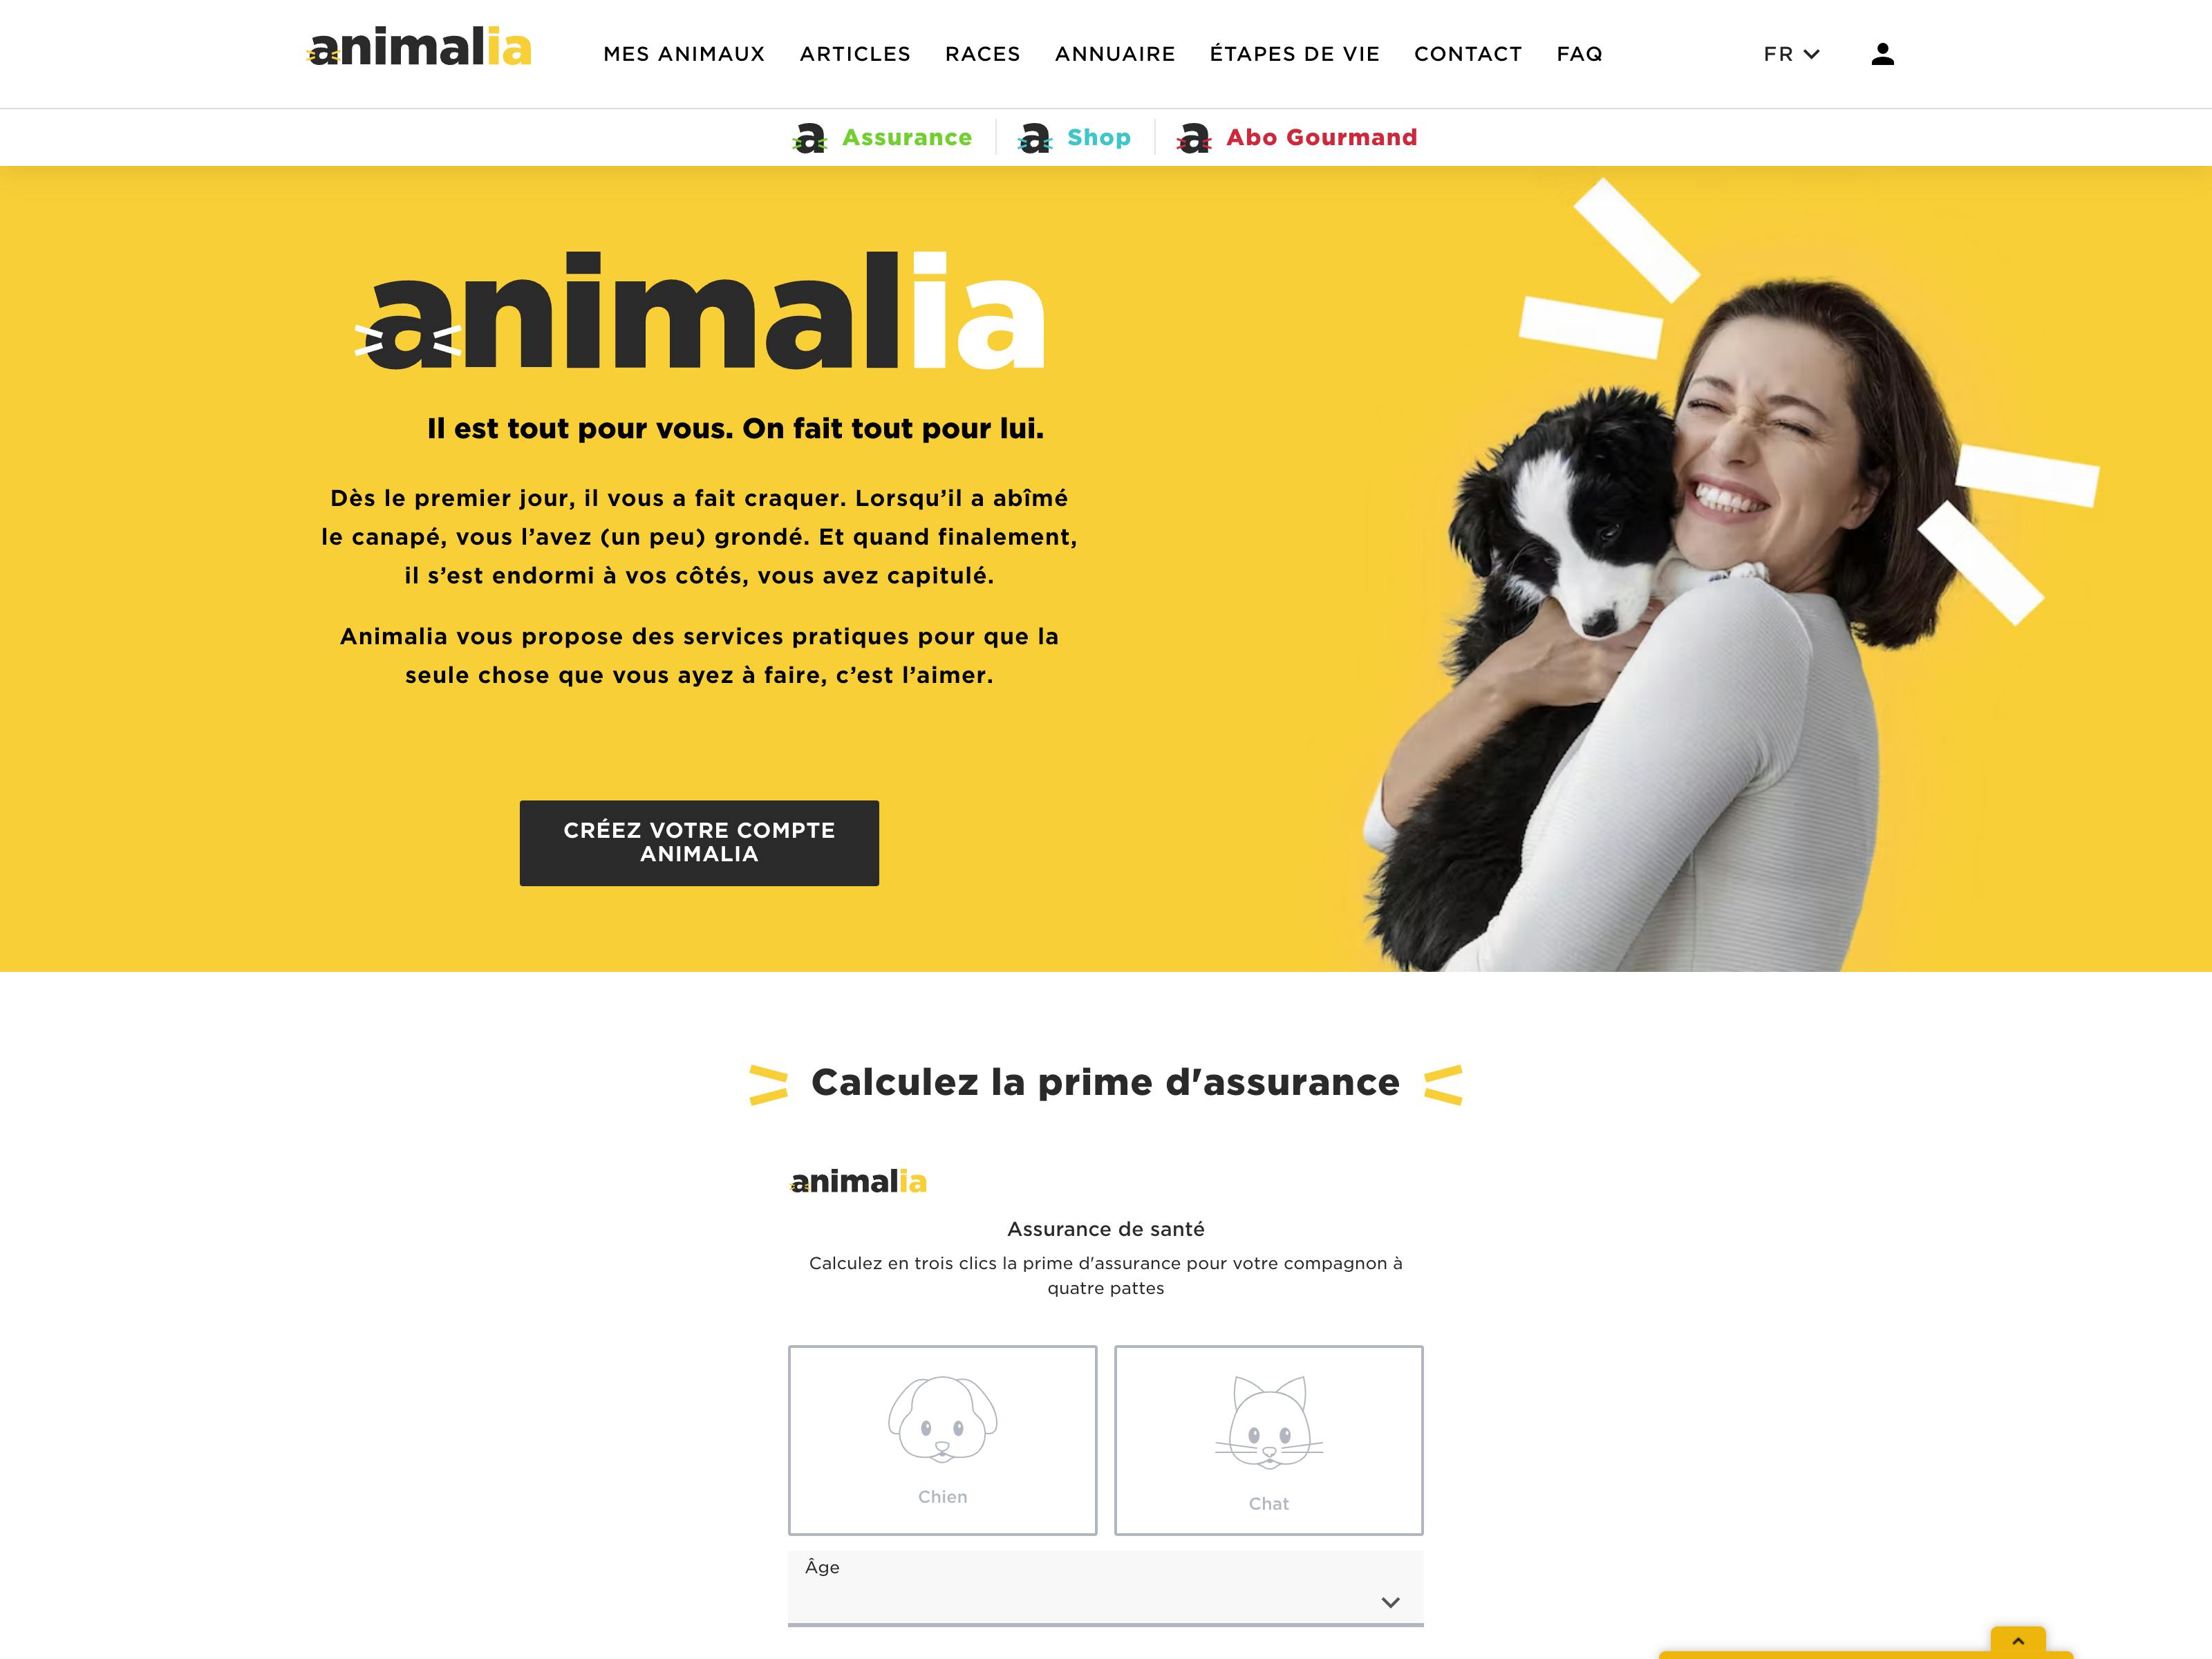 Animalia website screenshot